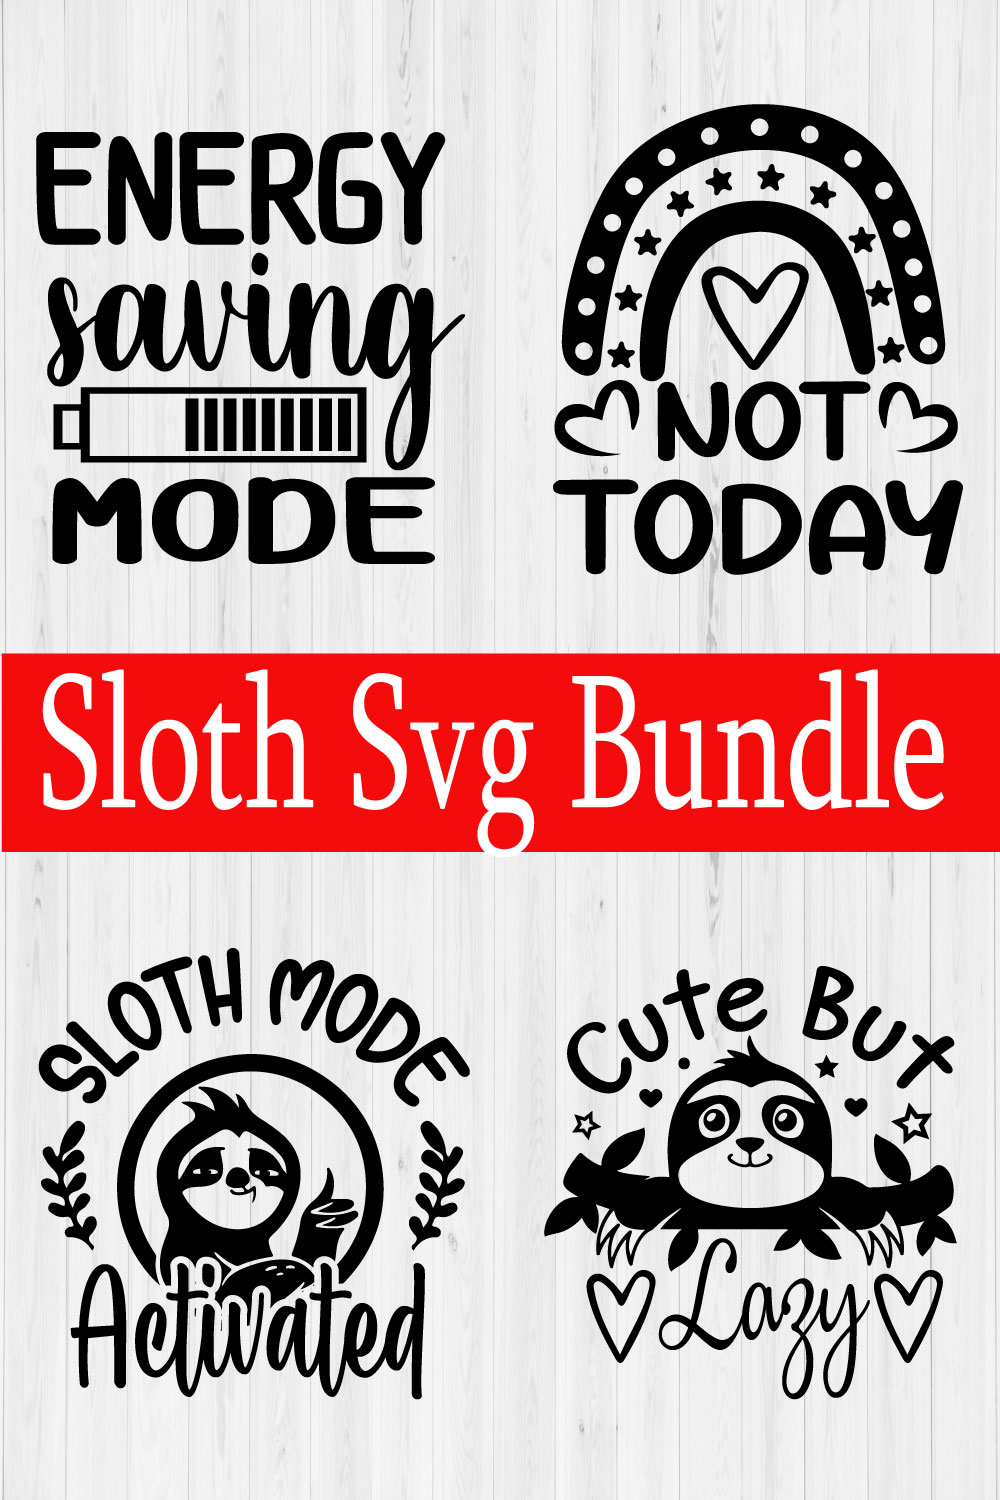 Sloth Svg Bundle Vol1 pinterest preview image.